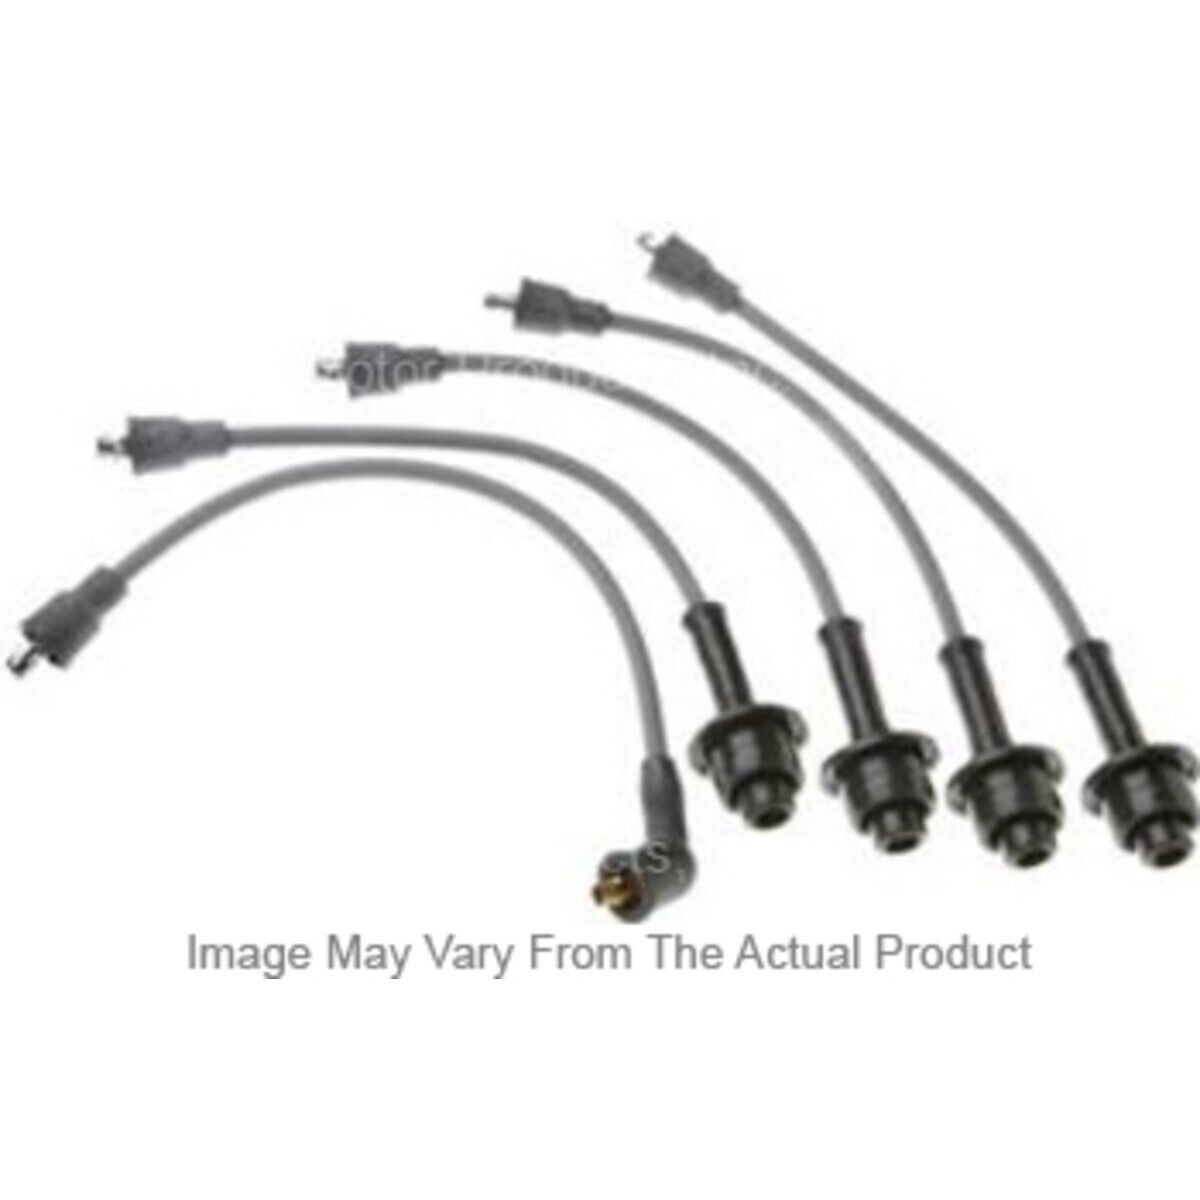 2946 Set of 8 Spark Plug Wires for Chevy Olds Le Sabre Suburban Blazer Malibu K5